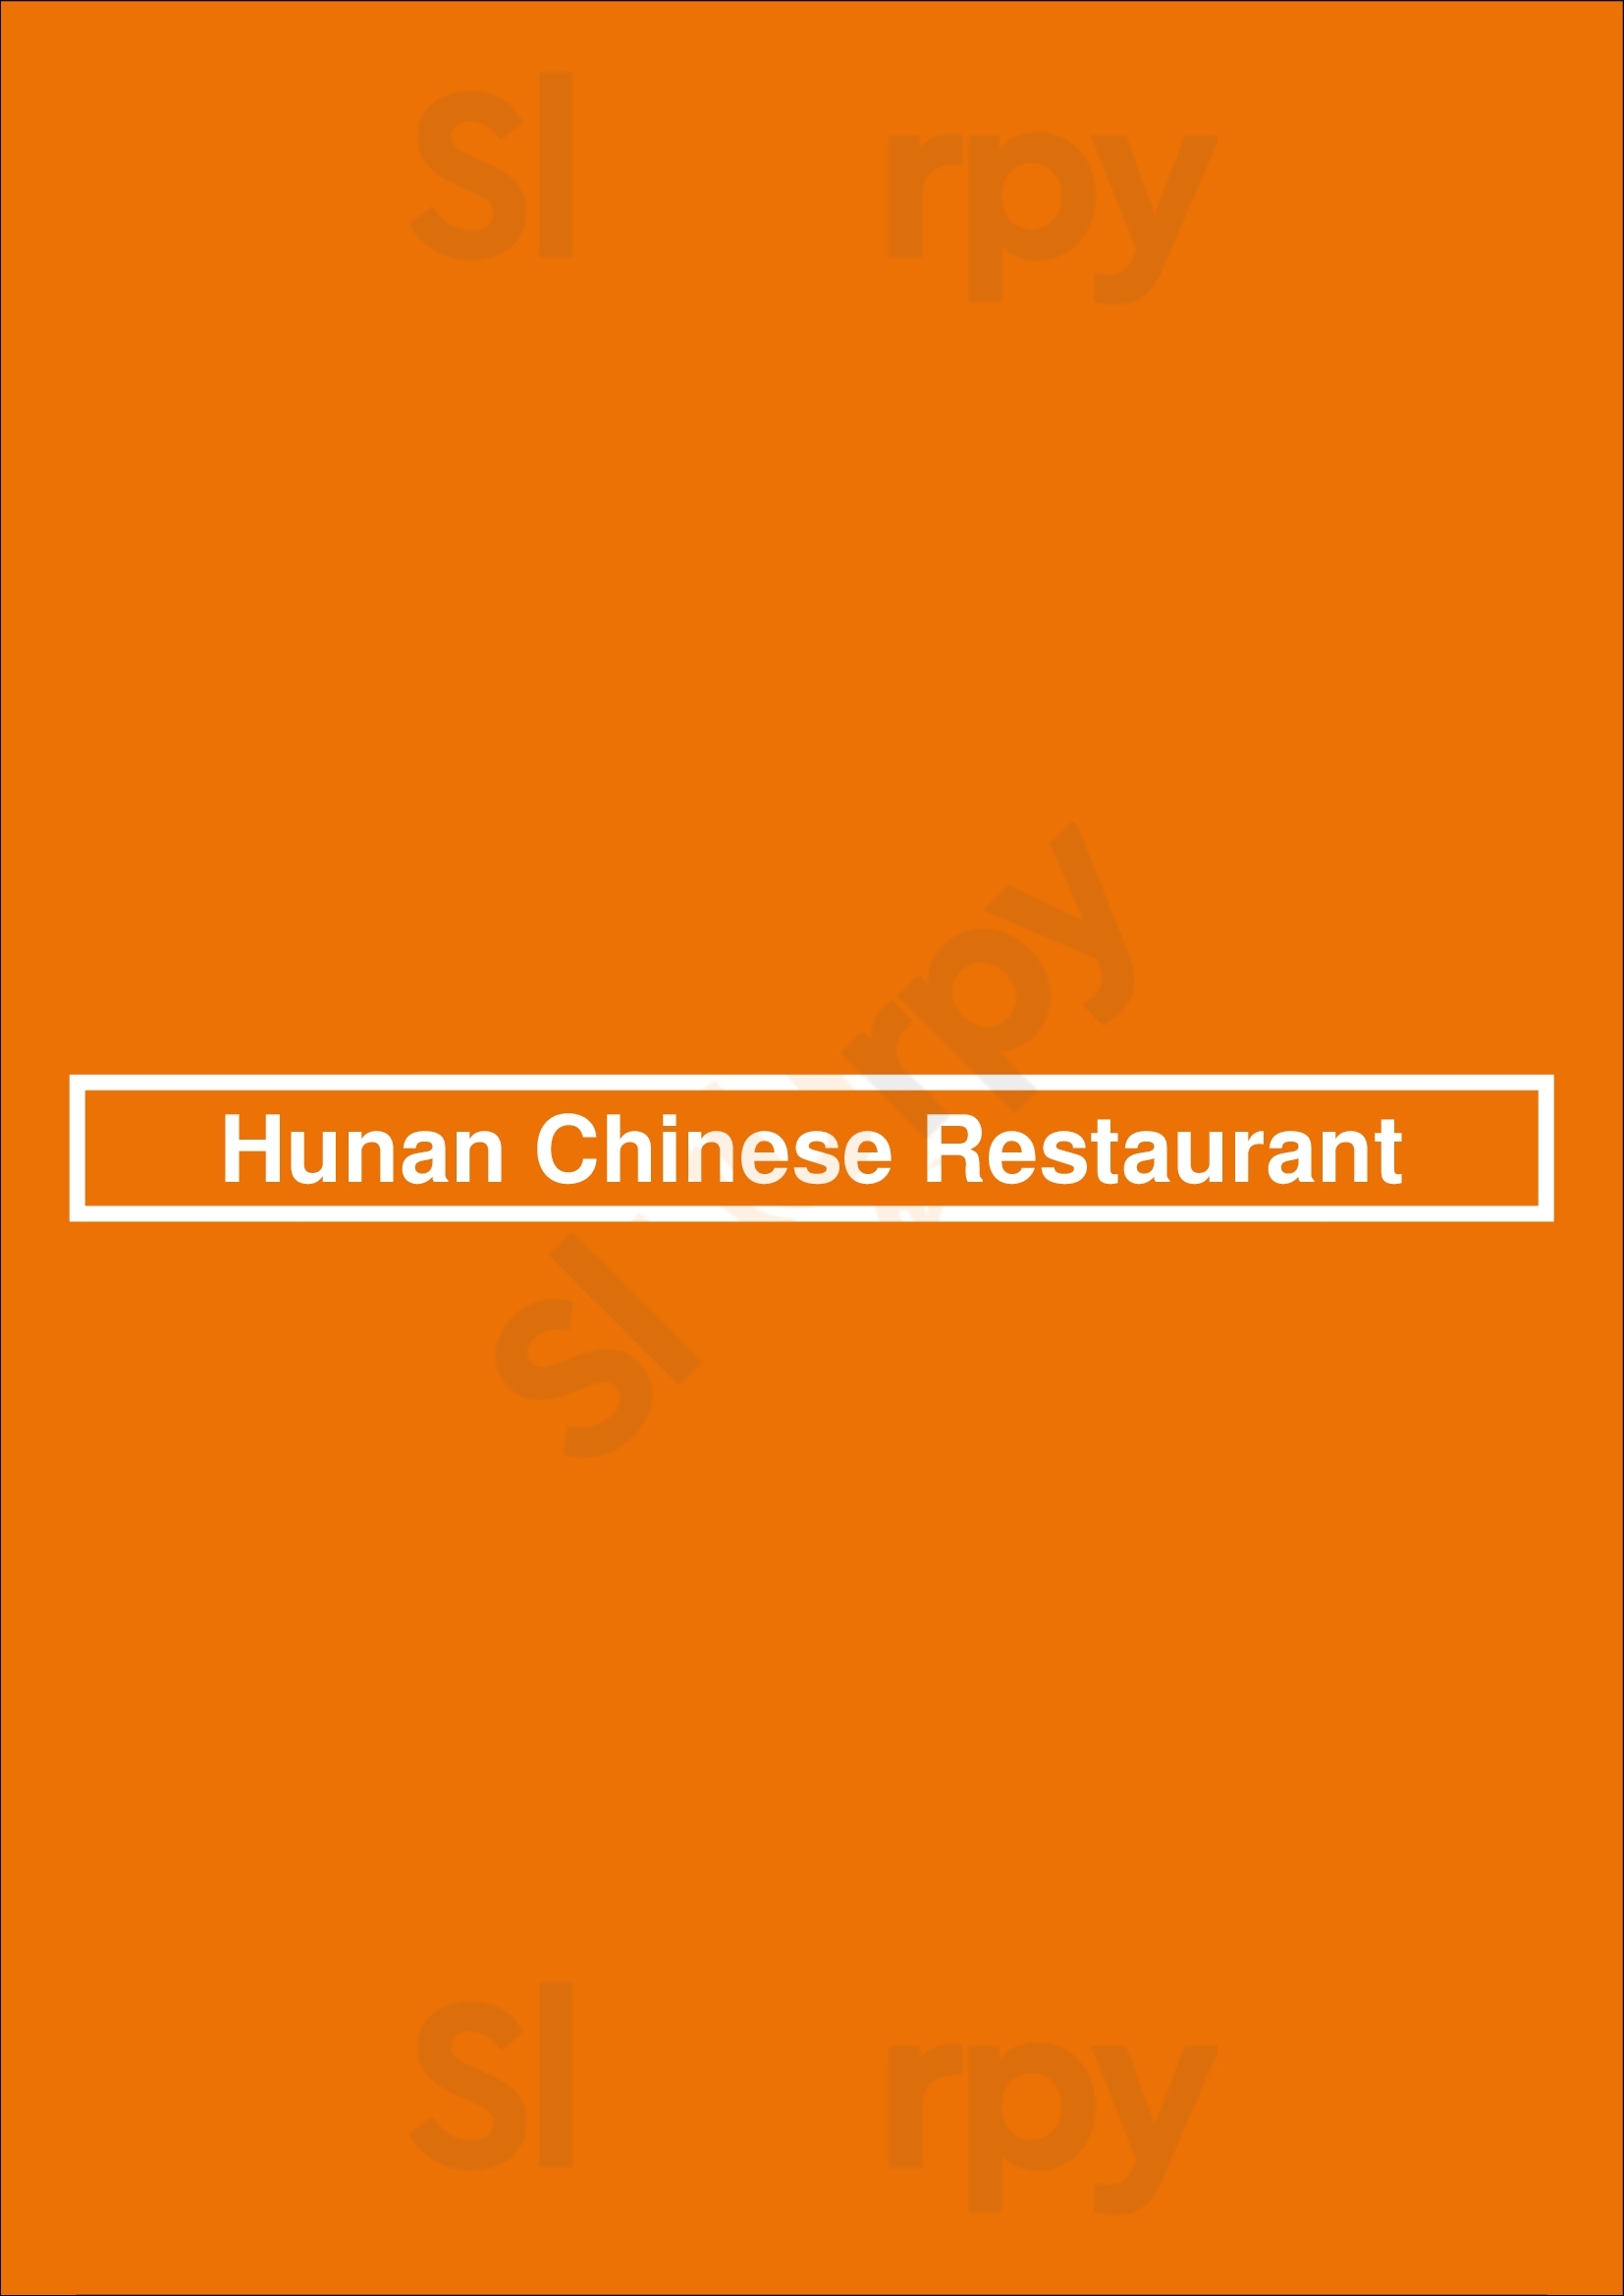 Hunan Chinese Restaurant Fresno Menu - 1